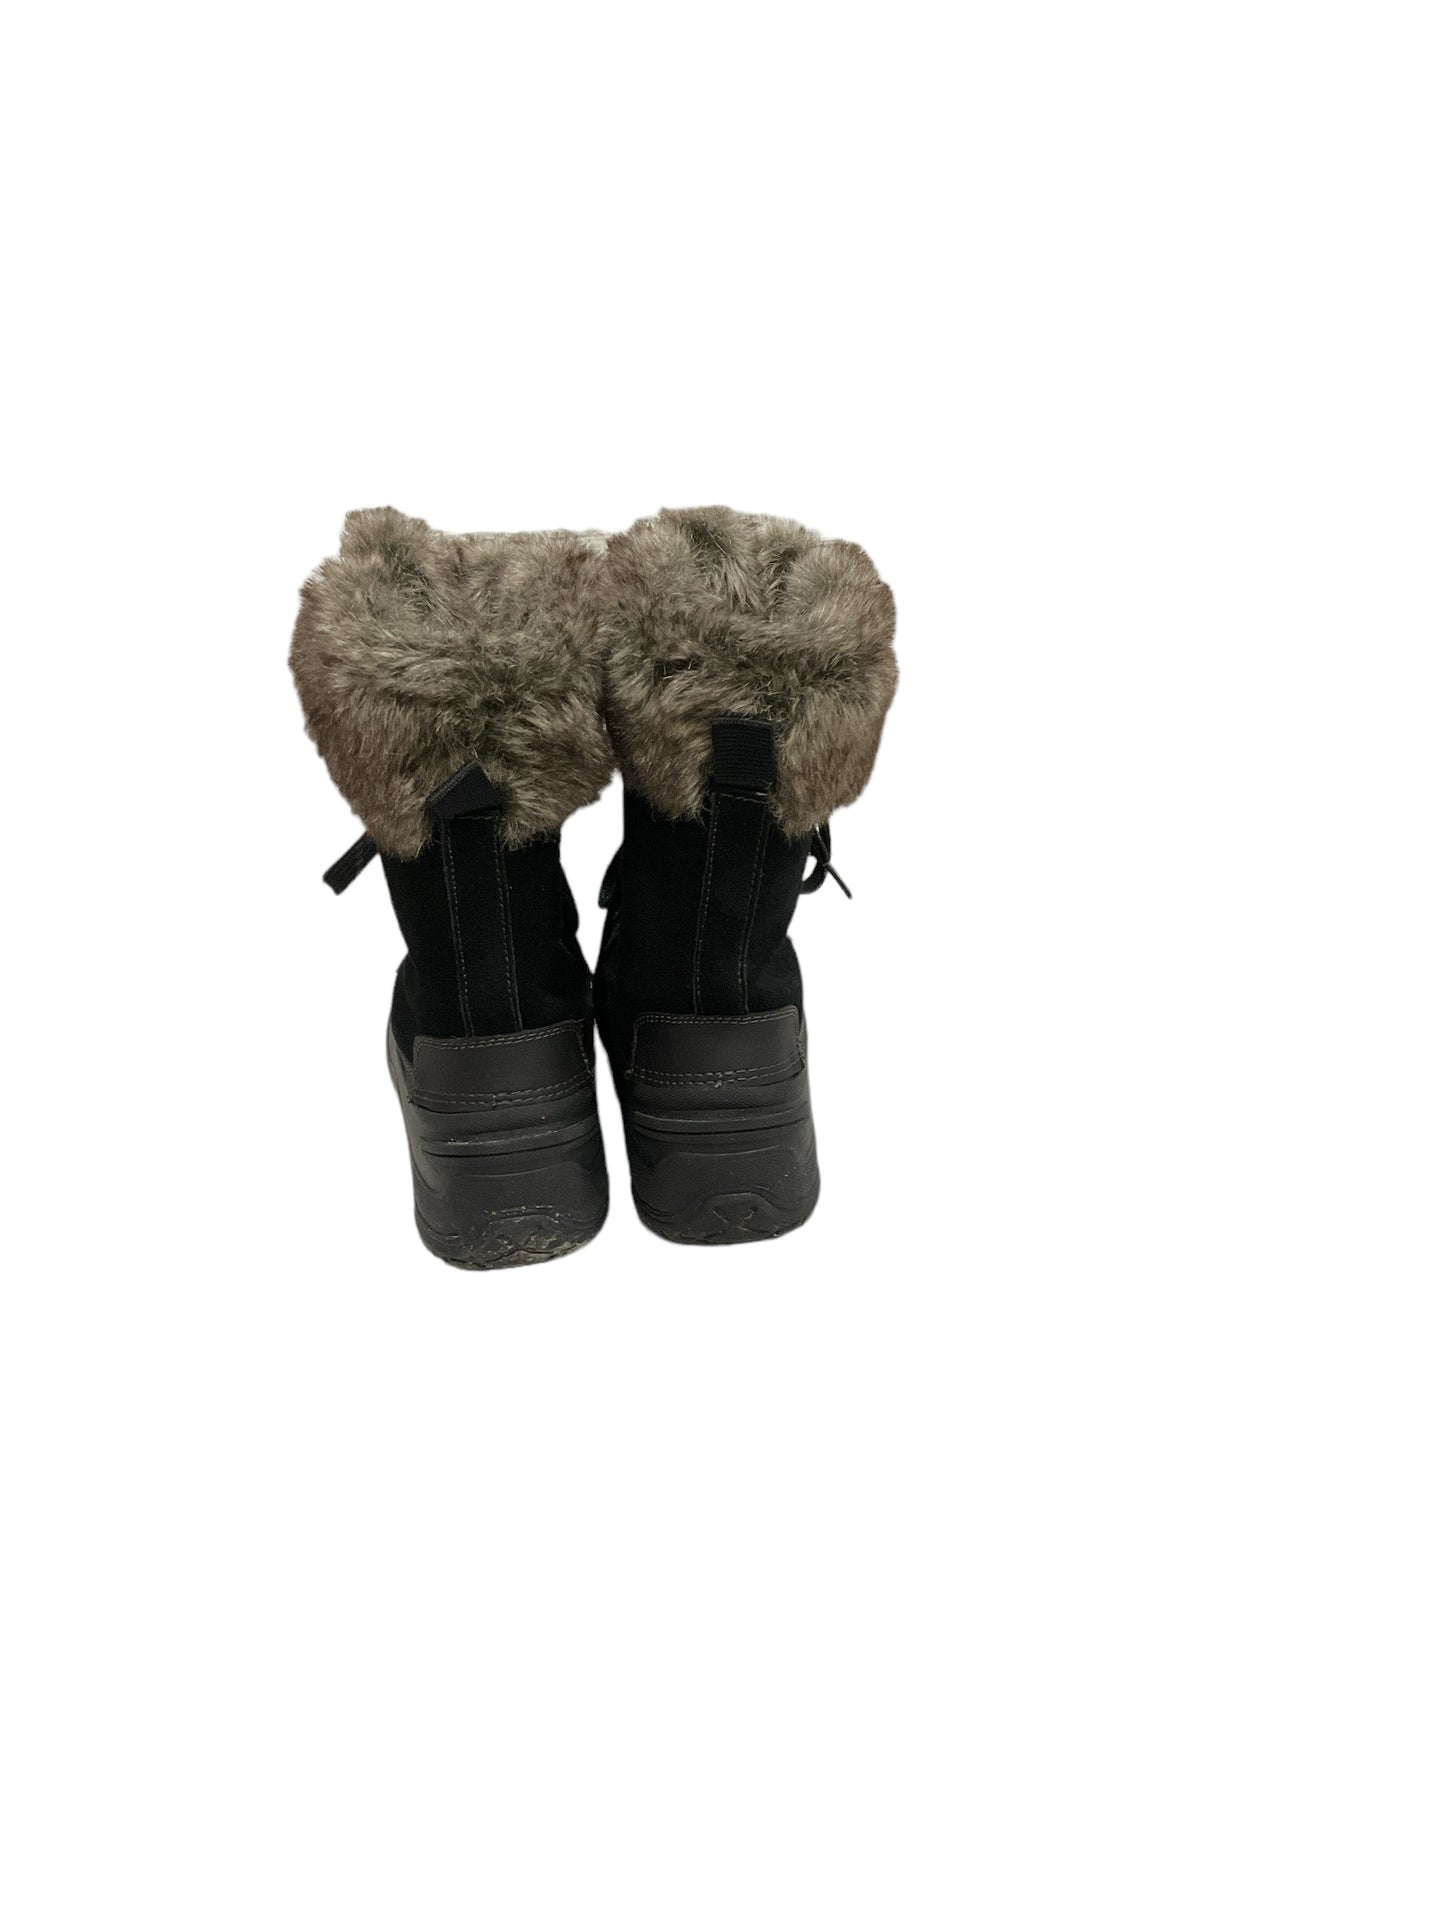 Boots Snow By Khombu  Size: 9